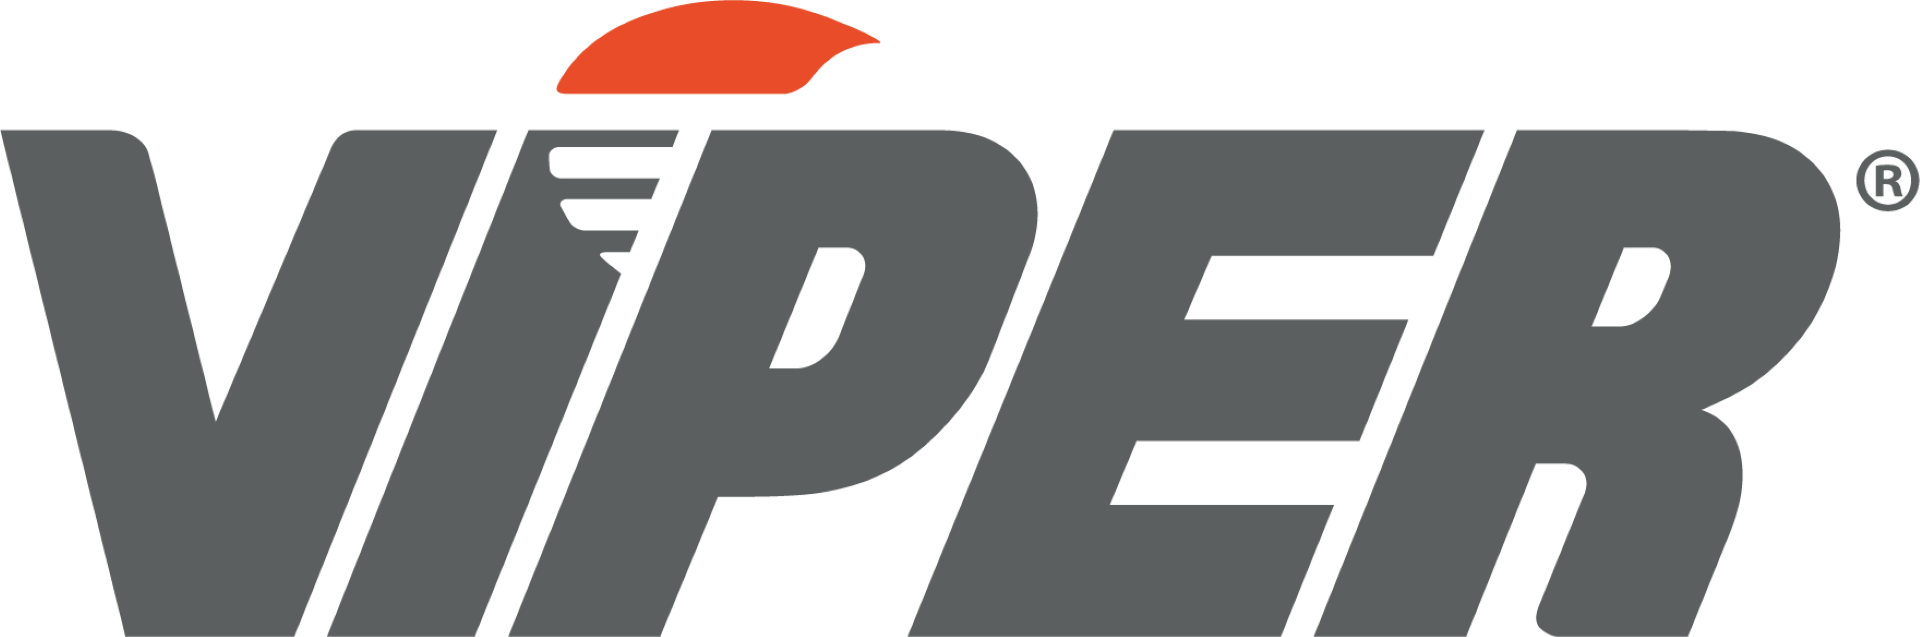 Viper_logo